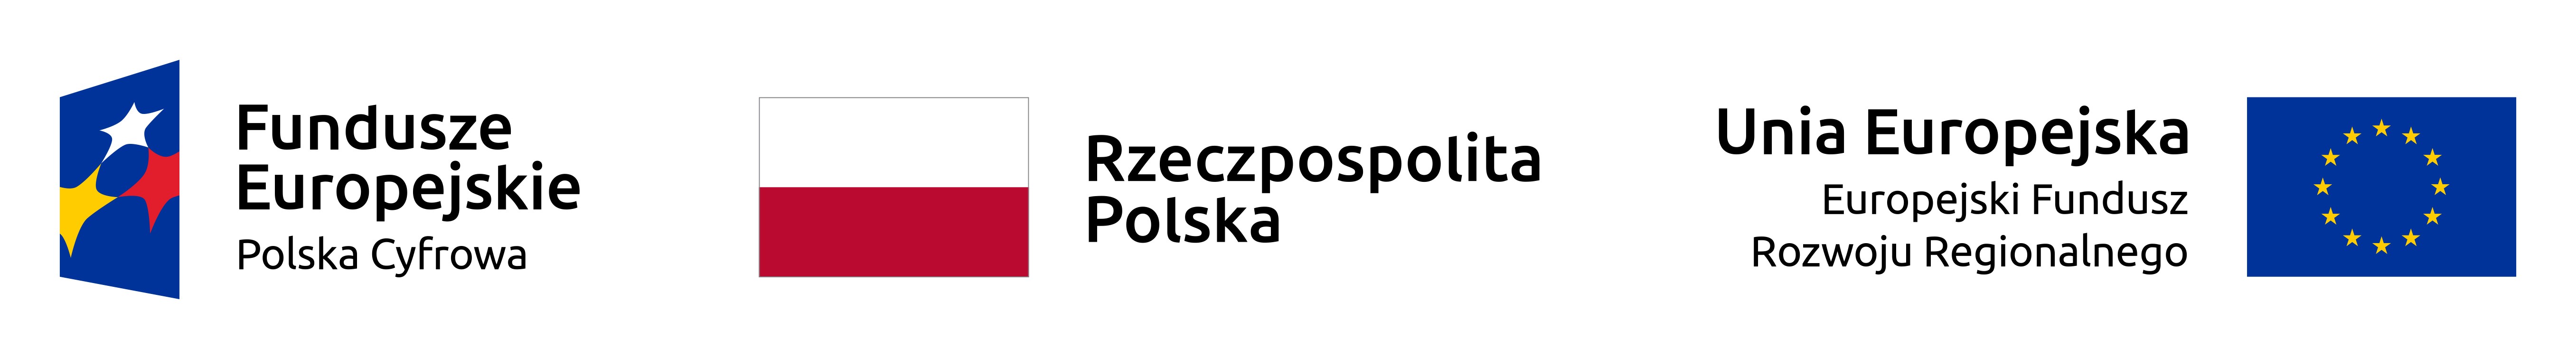 logo EFRR Polska Cyfrowa